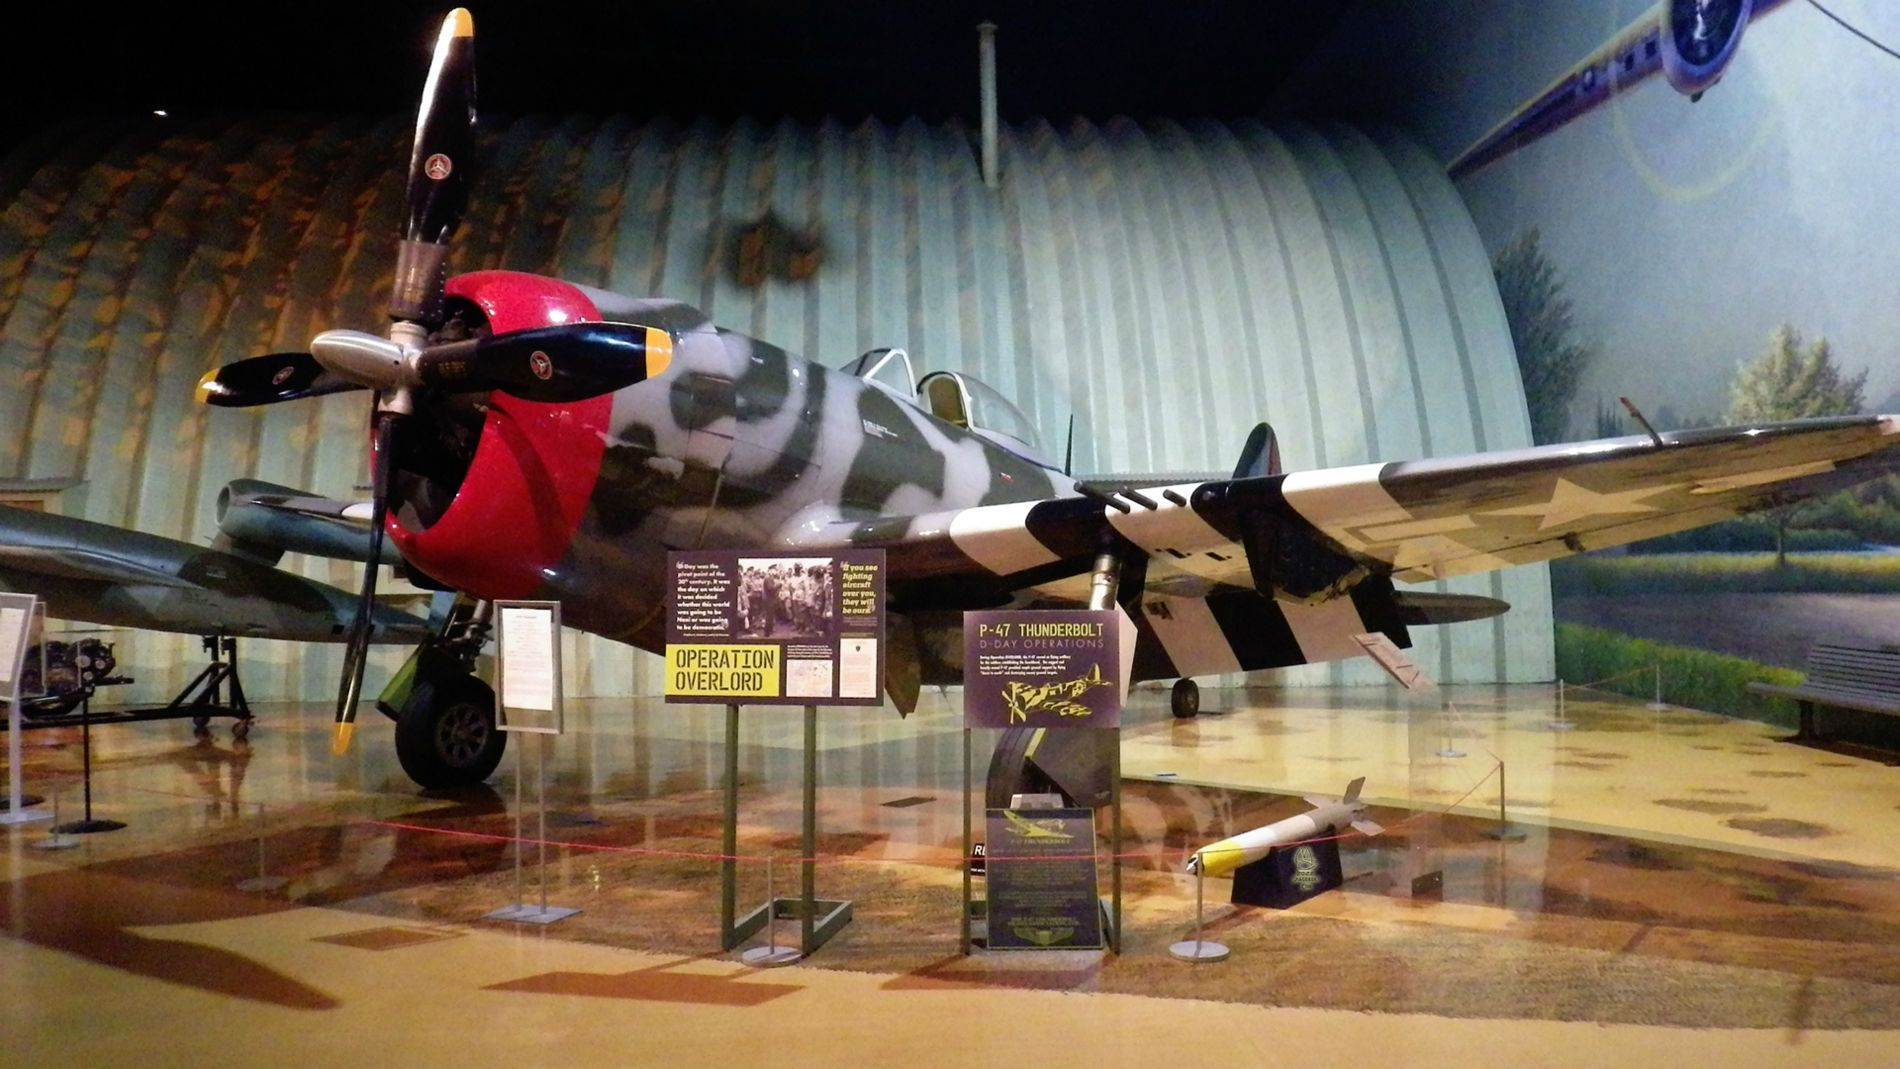 P-47 Thunderbolt.